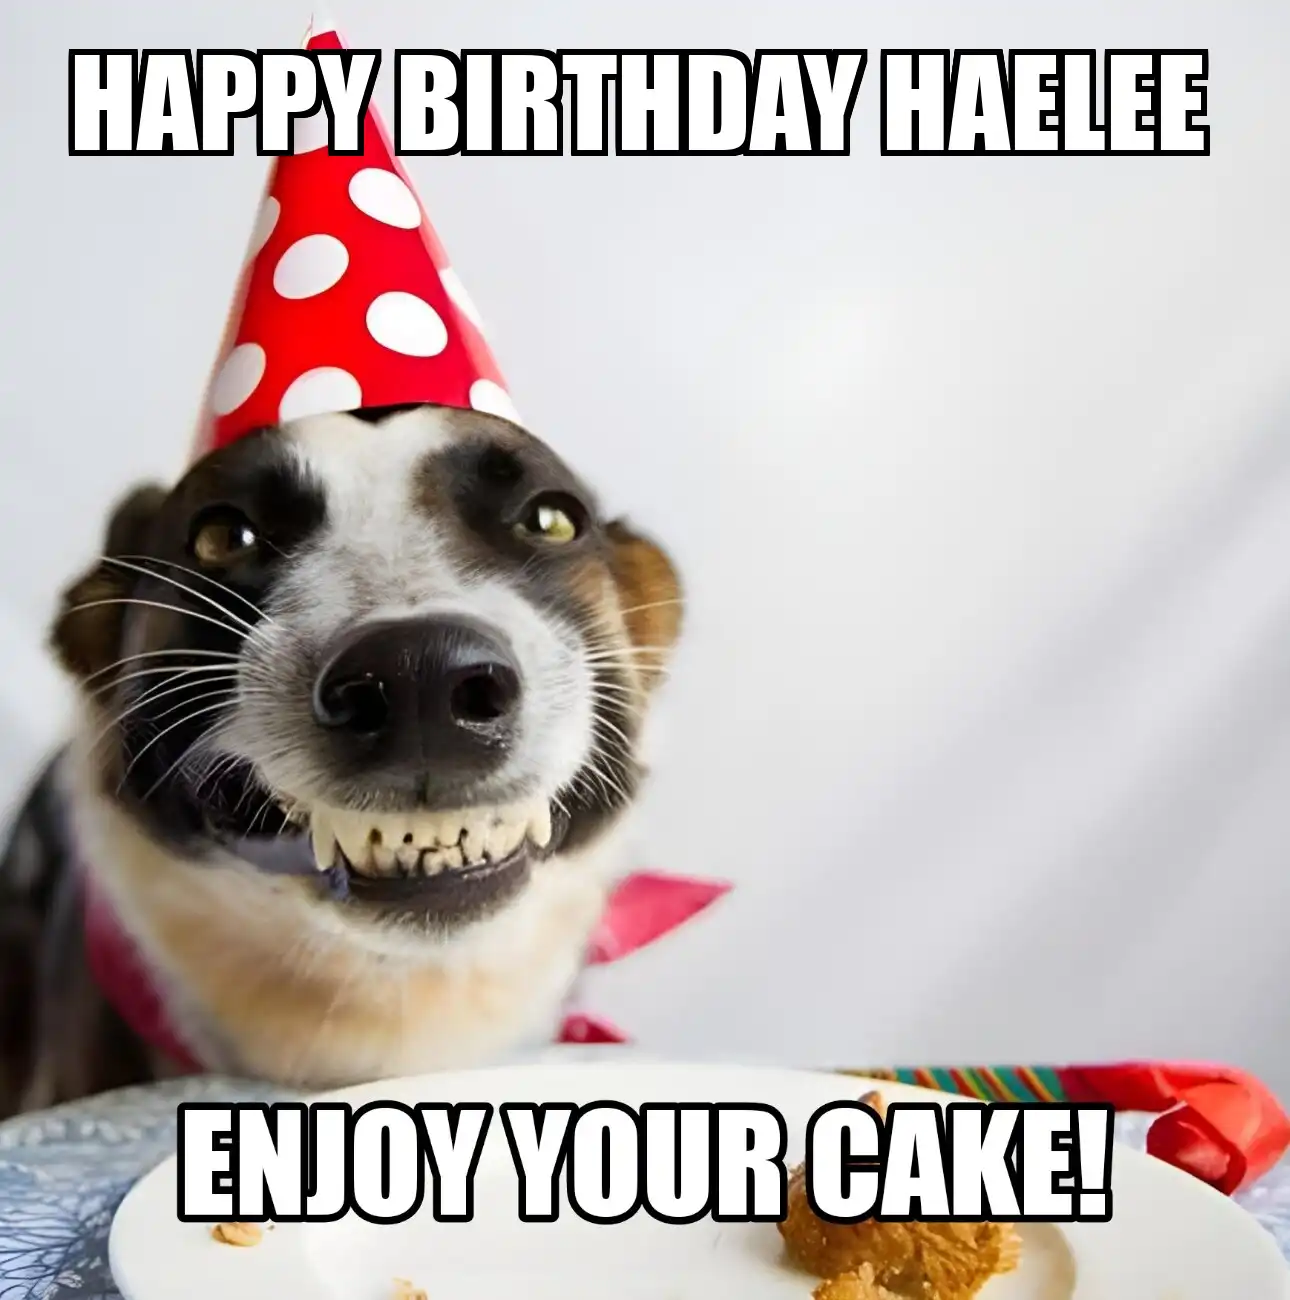 Happy Birthday Haelee Enjoy Your Cake Dog Meme